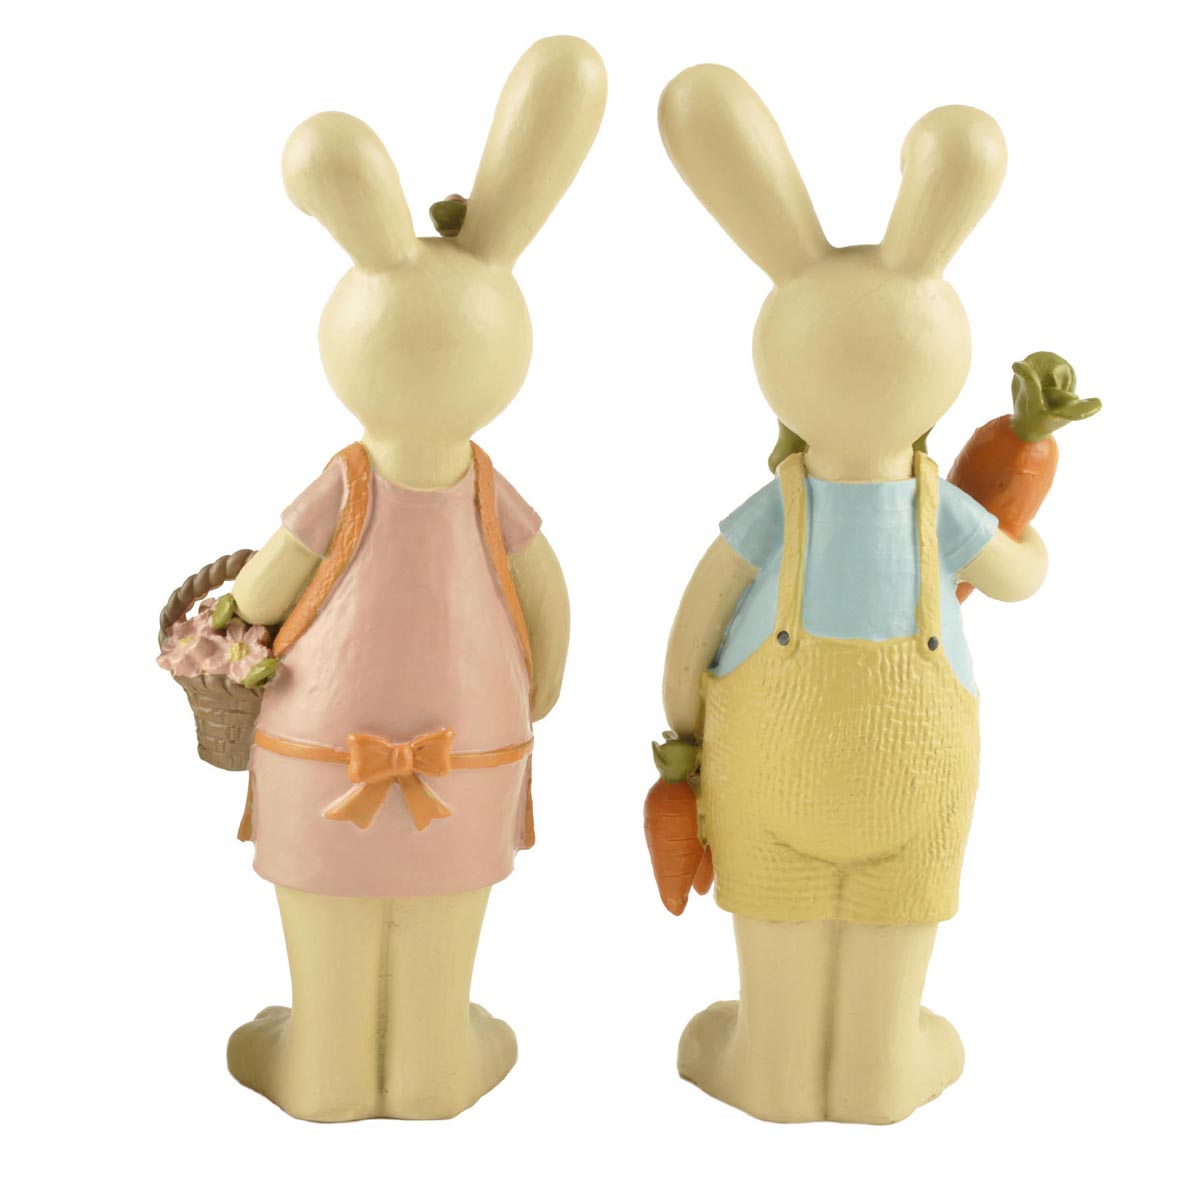 Ennas free sample vintage easter bunny figurines polyresin micro landscape-2